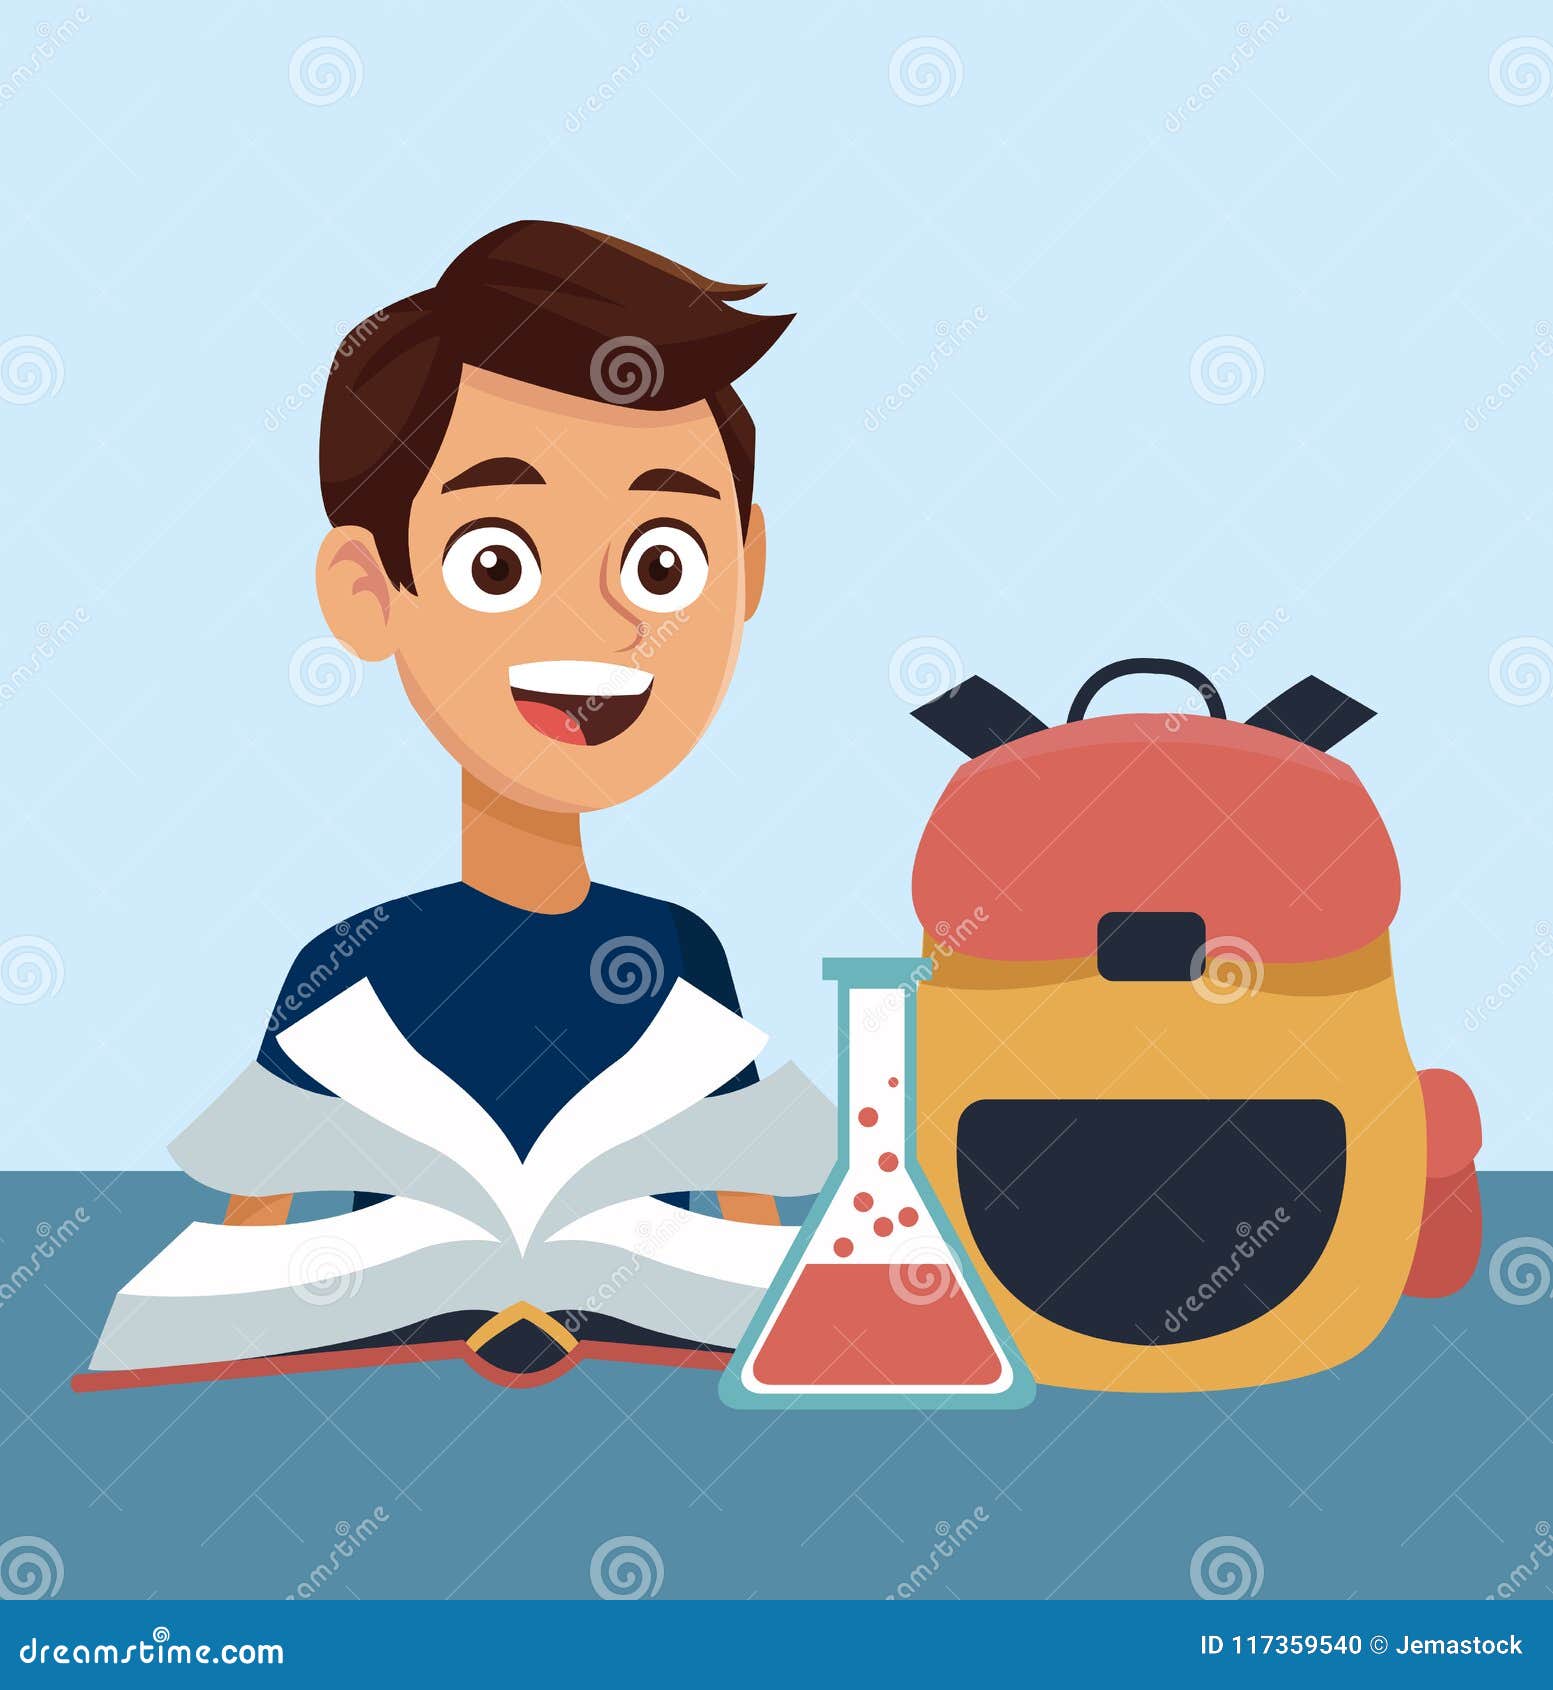 High School Education Cartoon Stock Vector - Illustration of educational,  supplies: 117359540